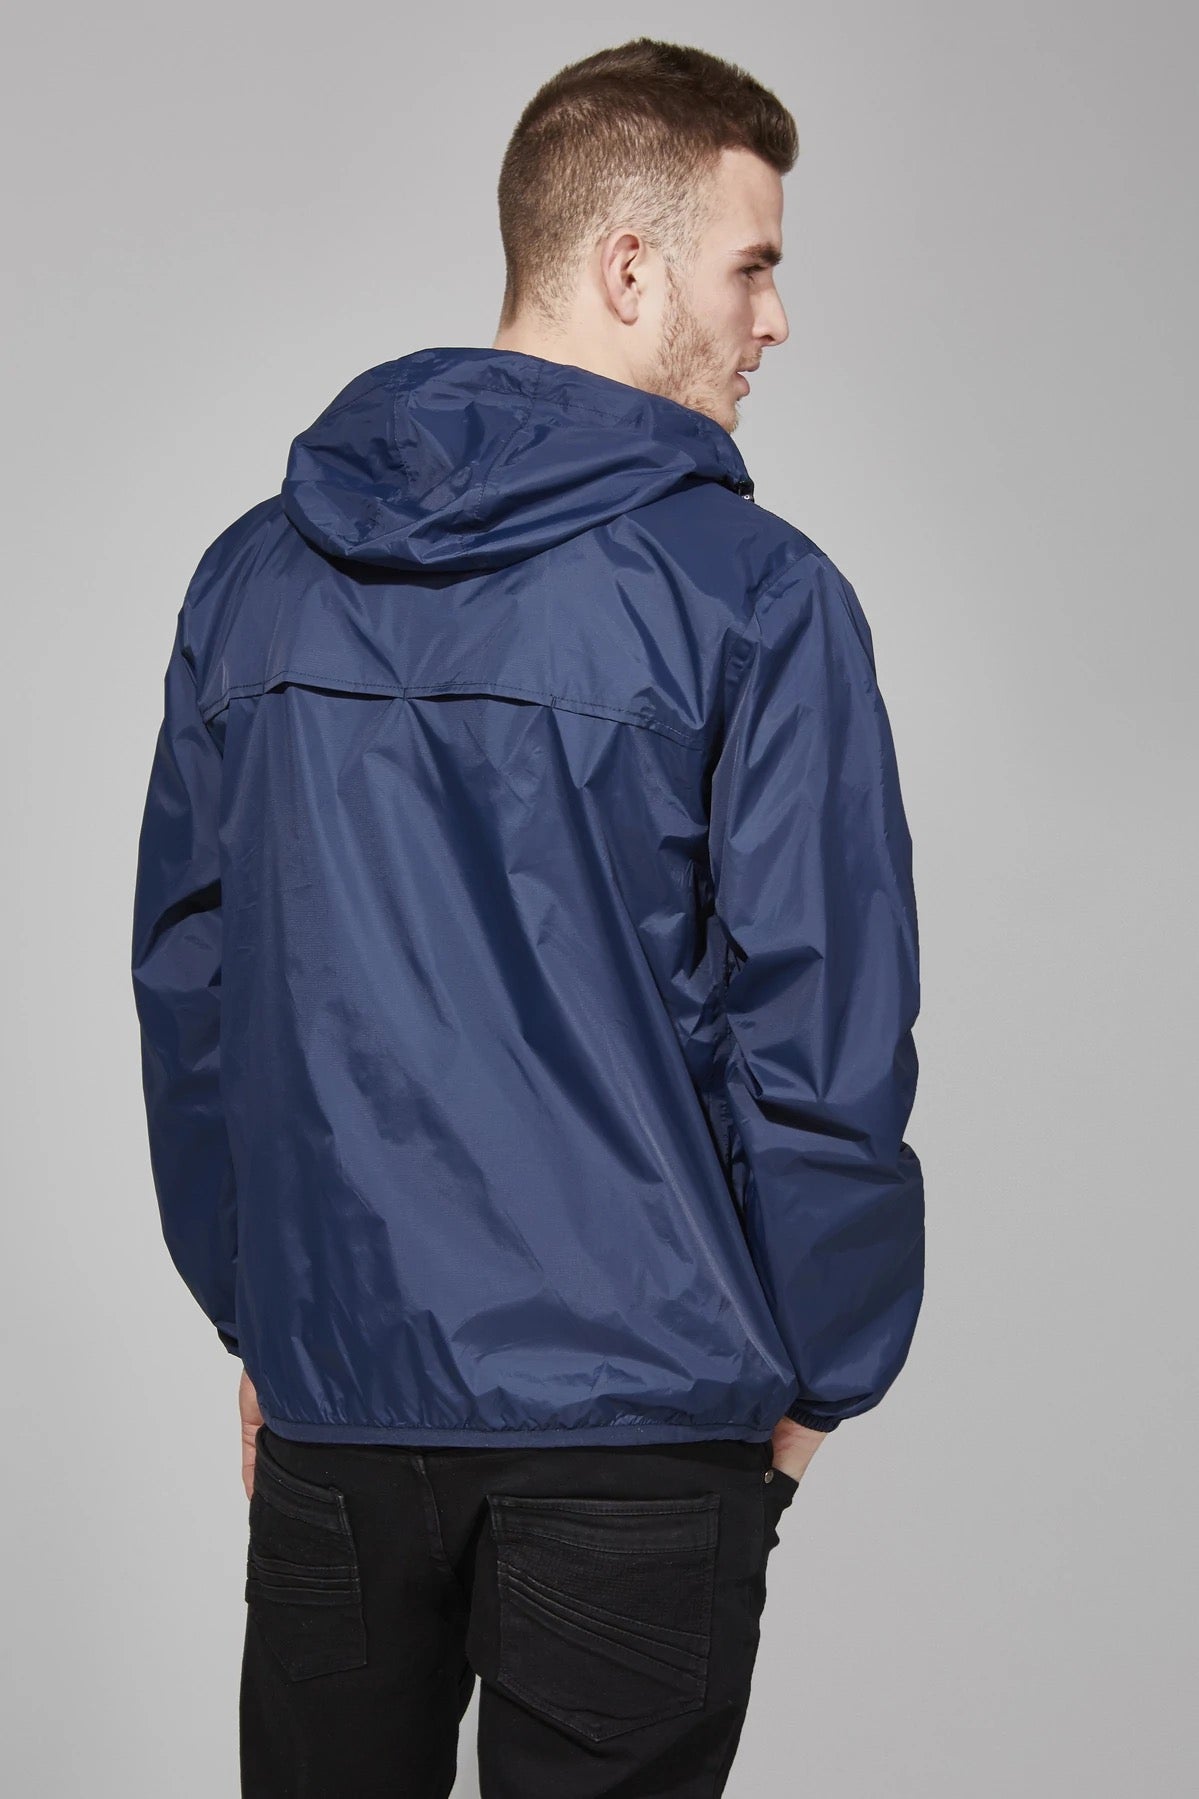 Navy full zip packable rain jacket and windbreaker - O8Lifestyle